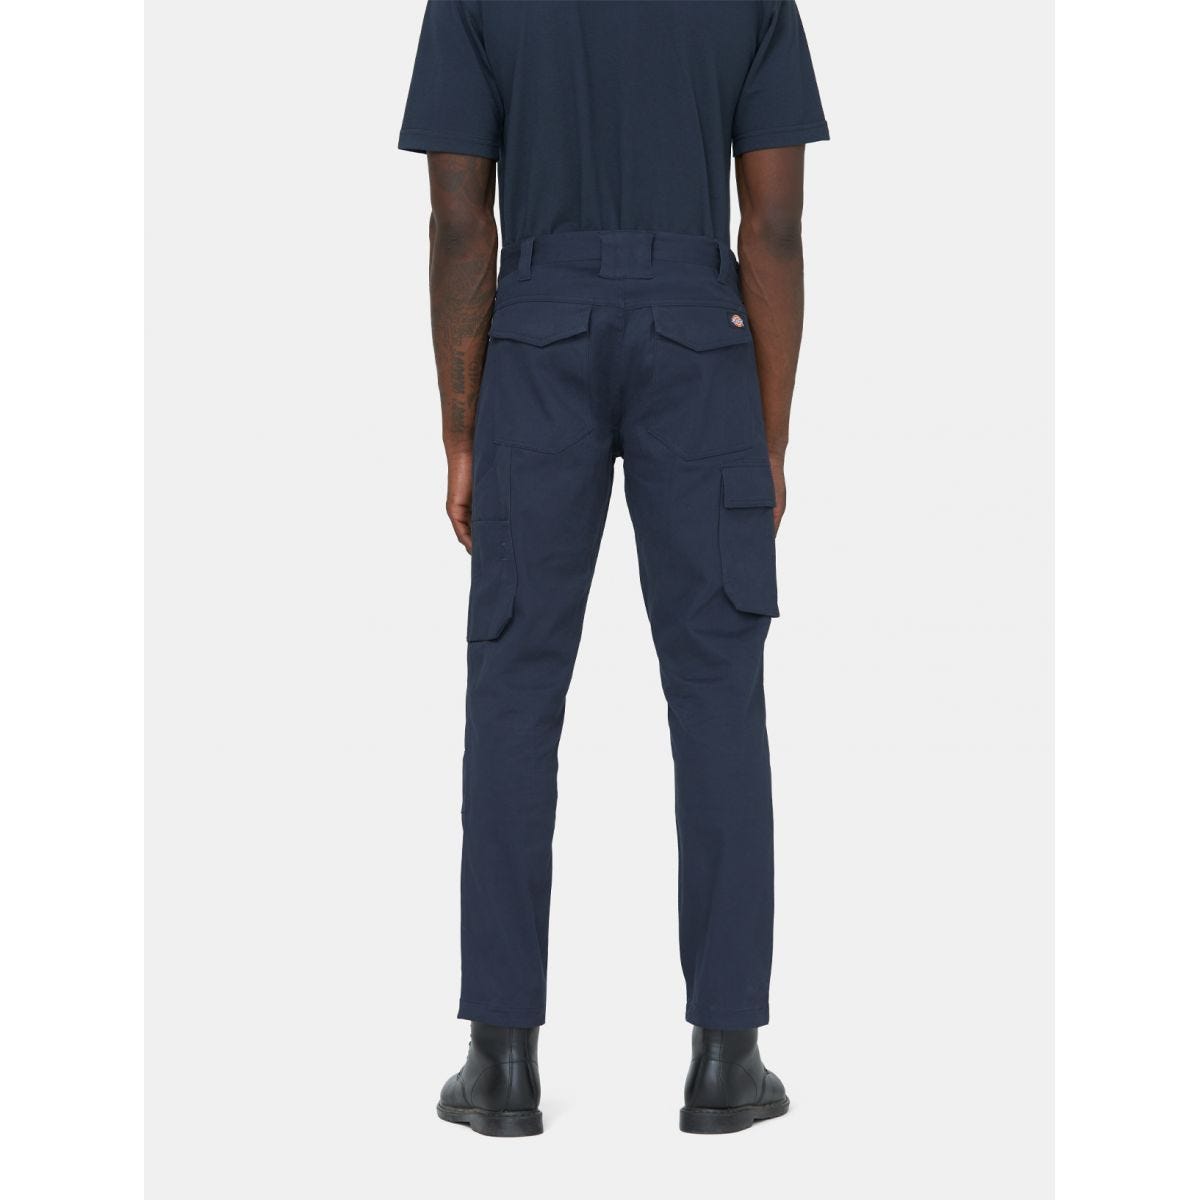 Pantalon Lead In Flex Bleu marine - Dickies - Taille 46 2